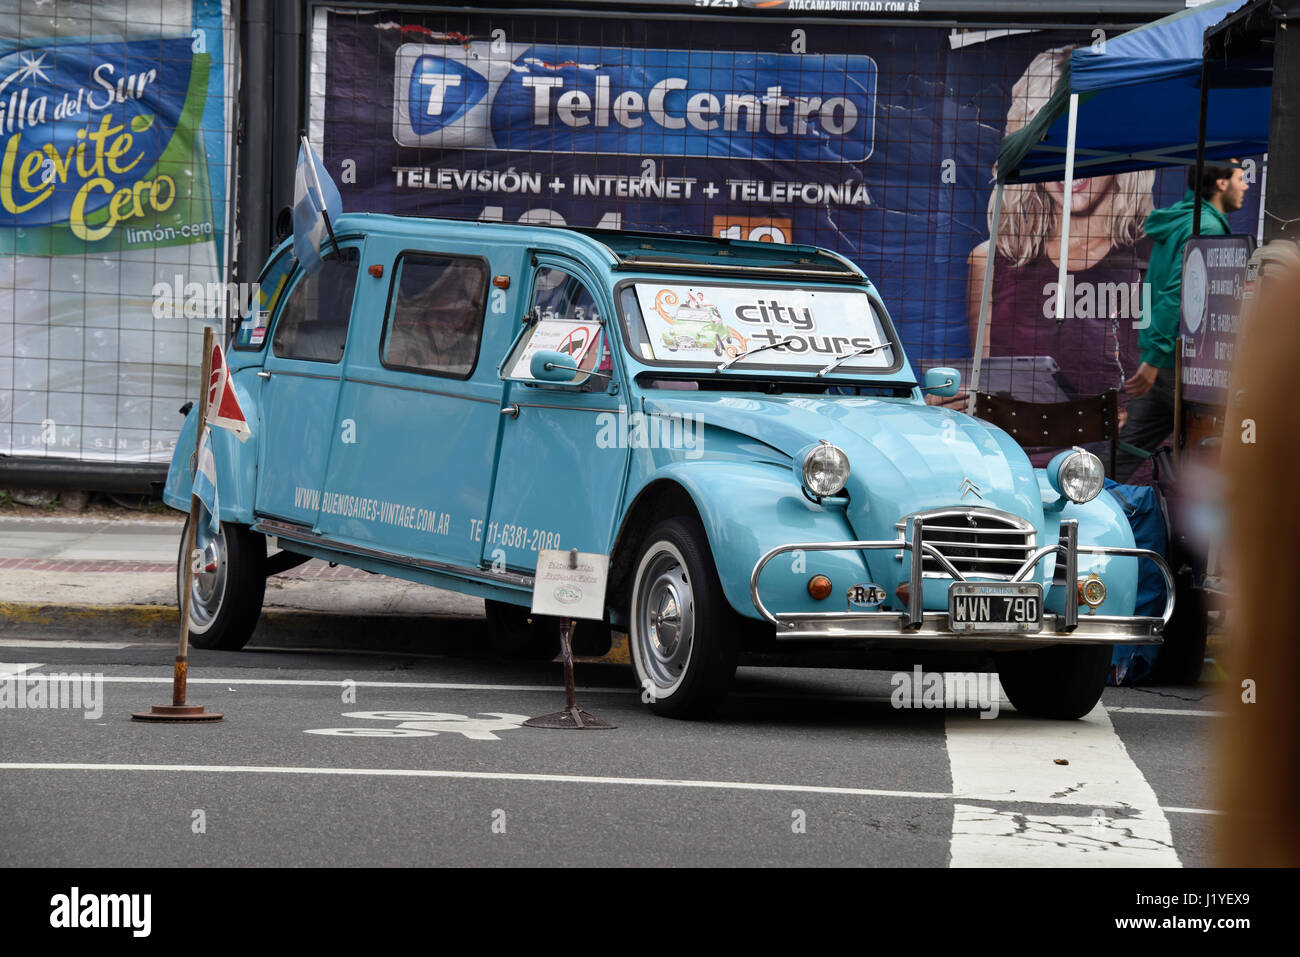 A blue Citroen City Tour car waiting in Caminito, Buenos Aires Stock Photo